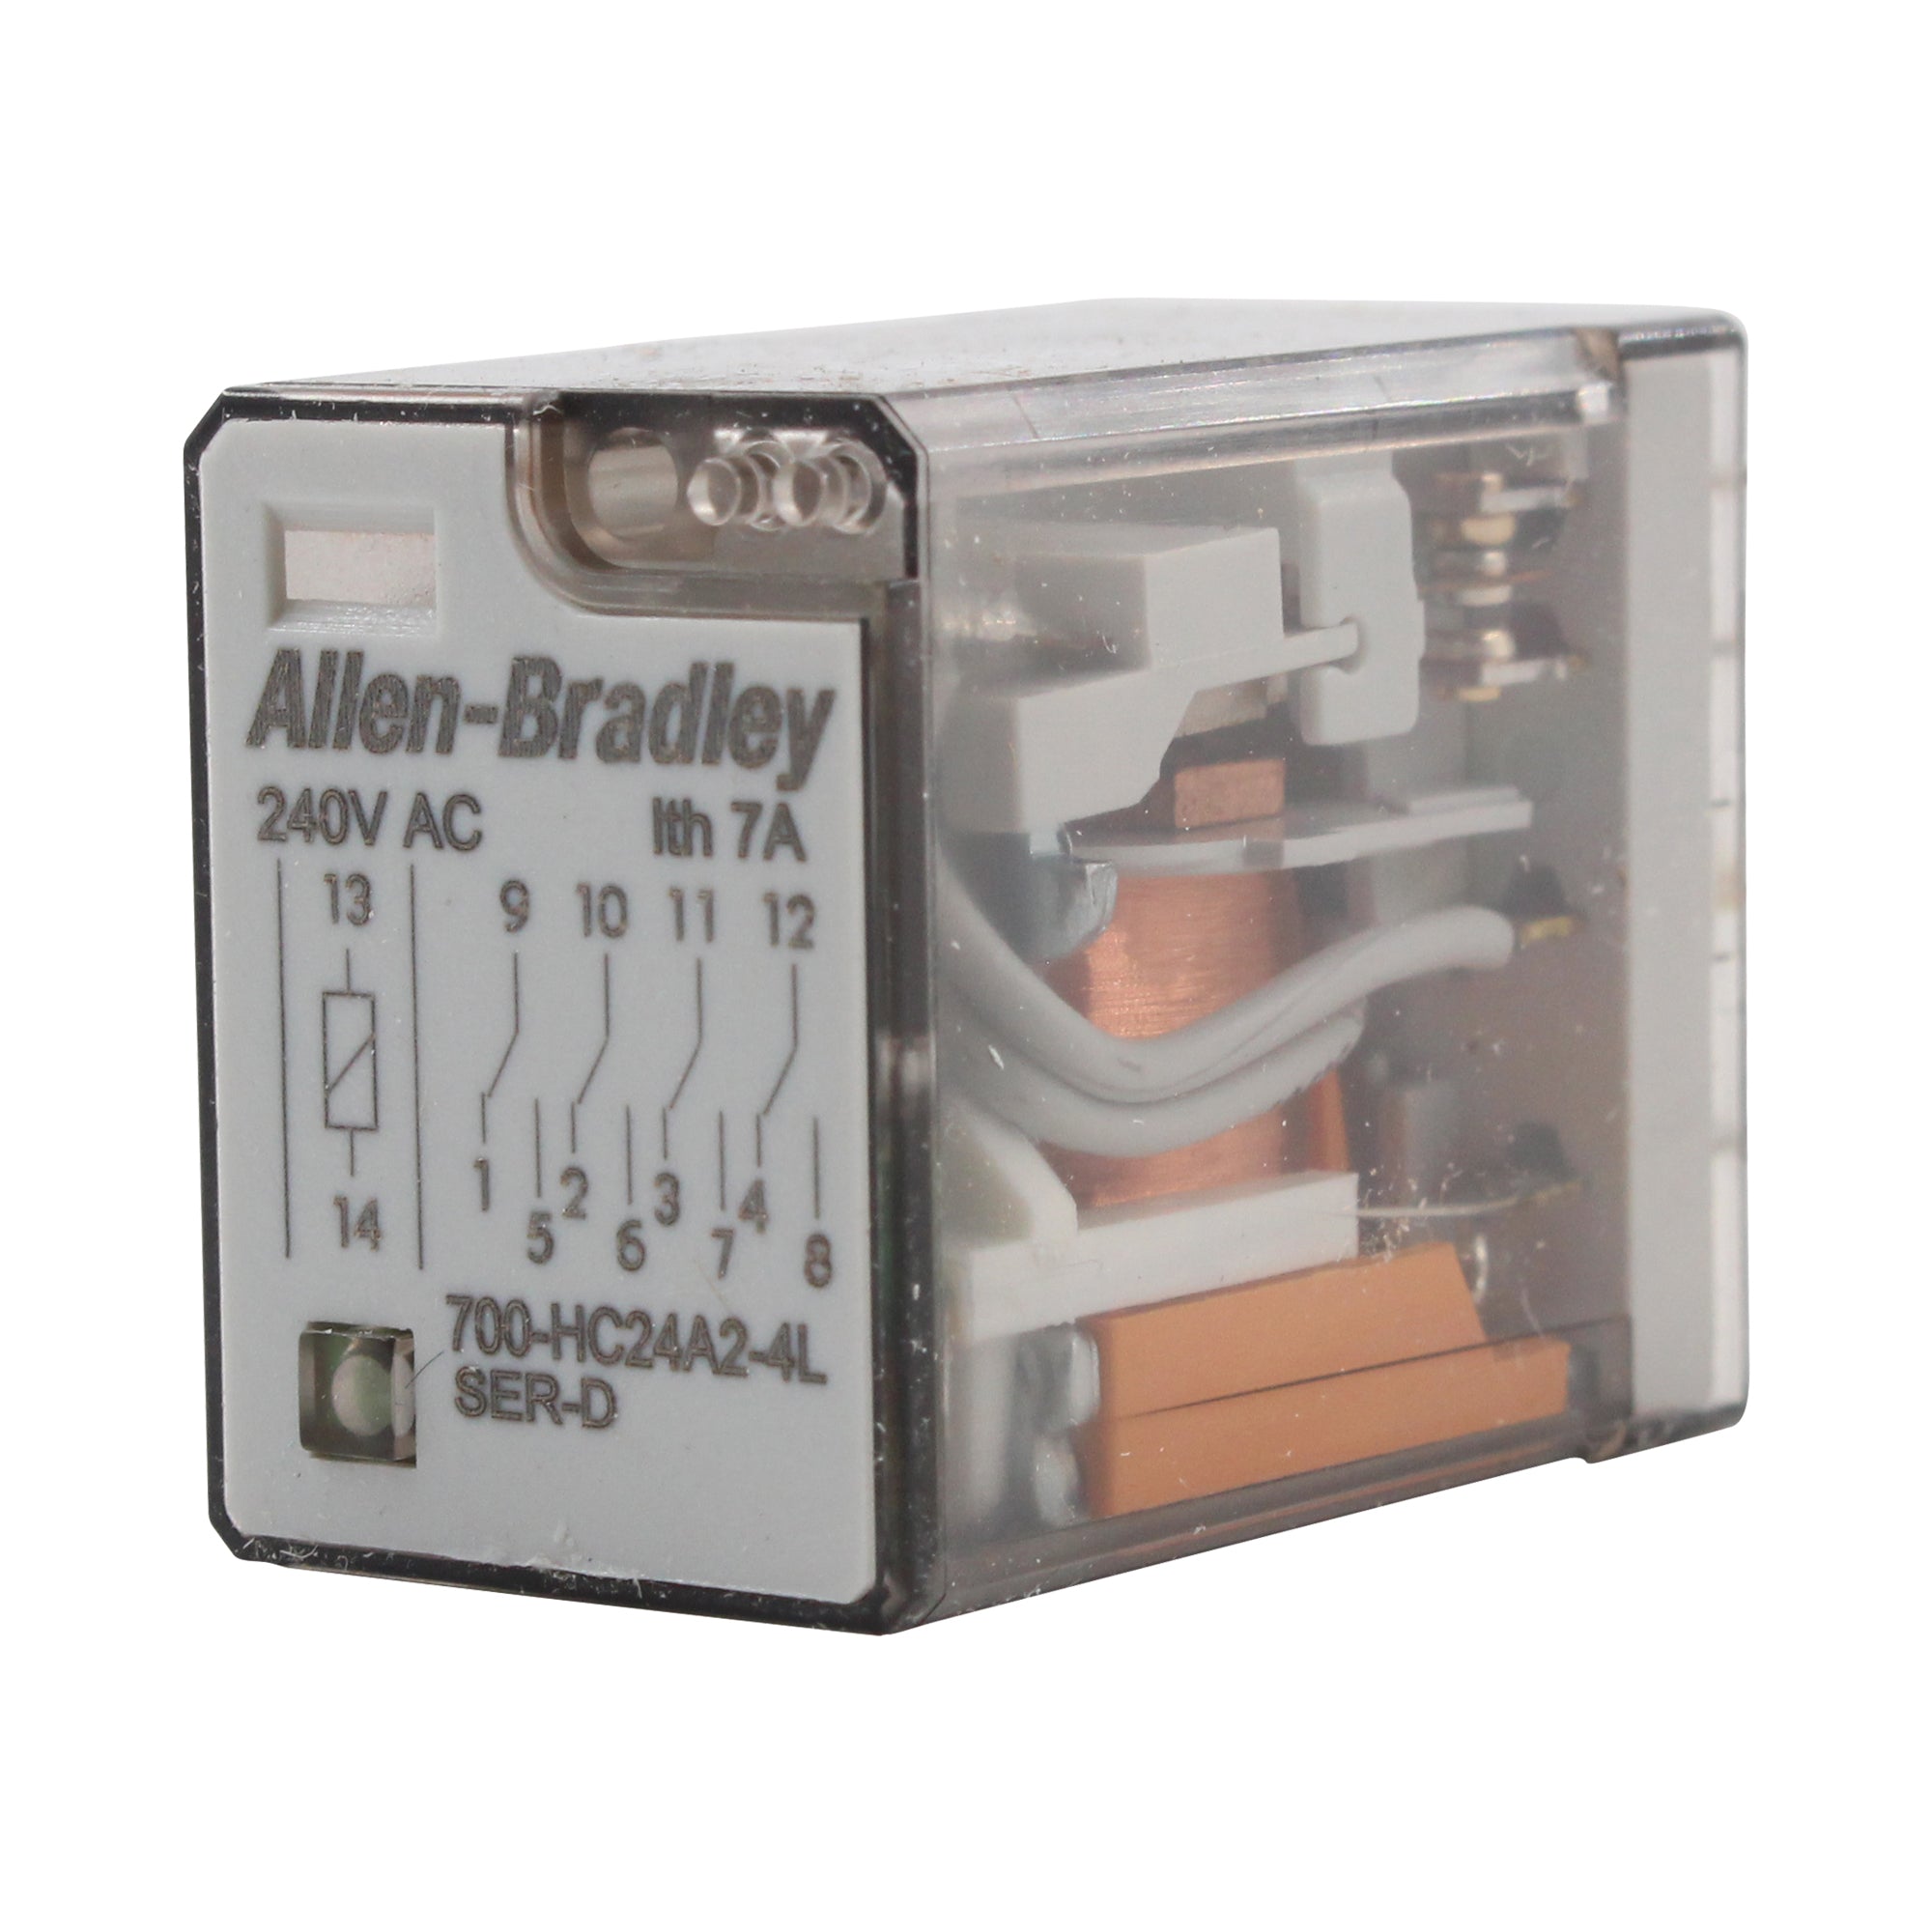 Allen Bradley Group, ALLEN BRADLEY 700-HC24A2-4L ICE-CUBE RELAY, -3 OPTION, 14-BLADE, 4PDT, 7A, 24V